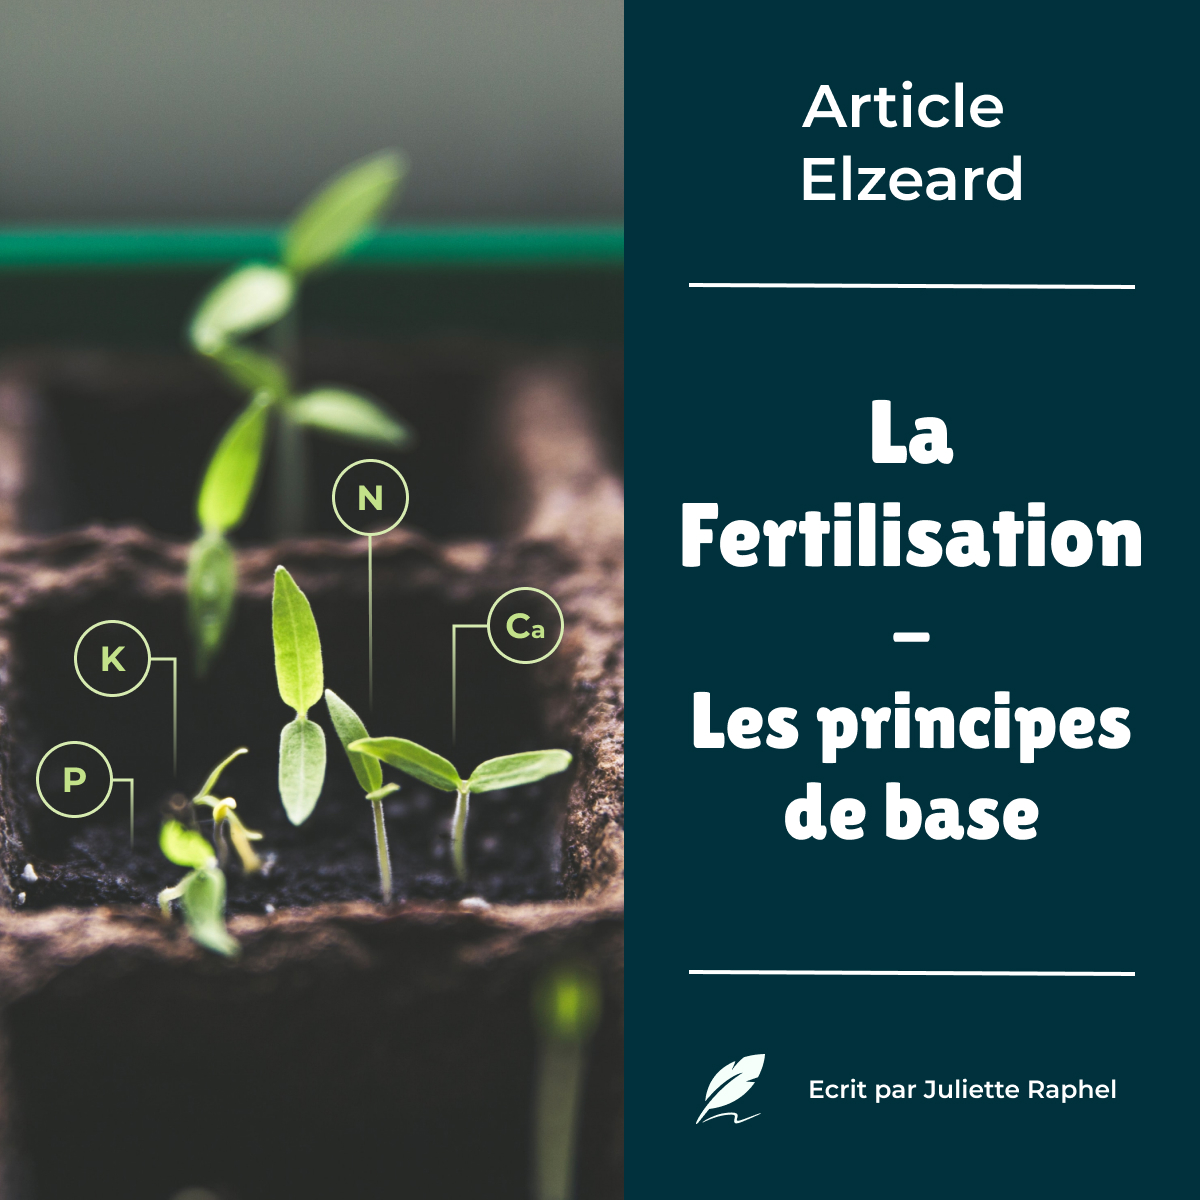 Les principes de base de la fertilisation des sols